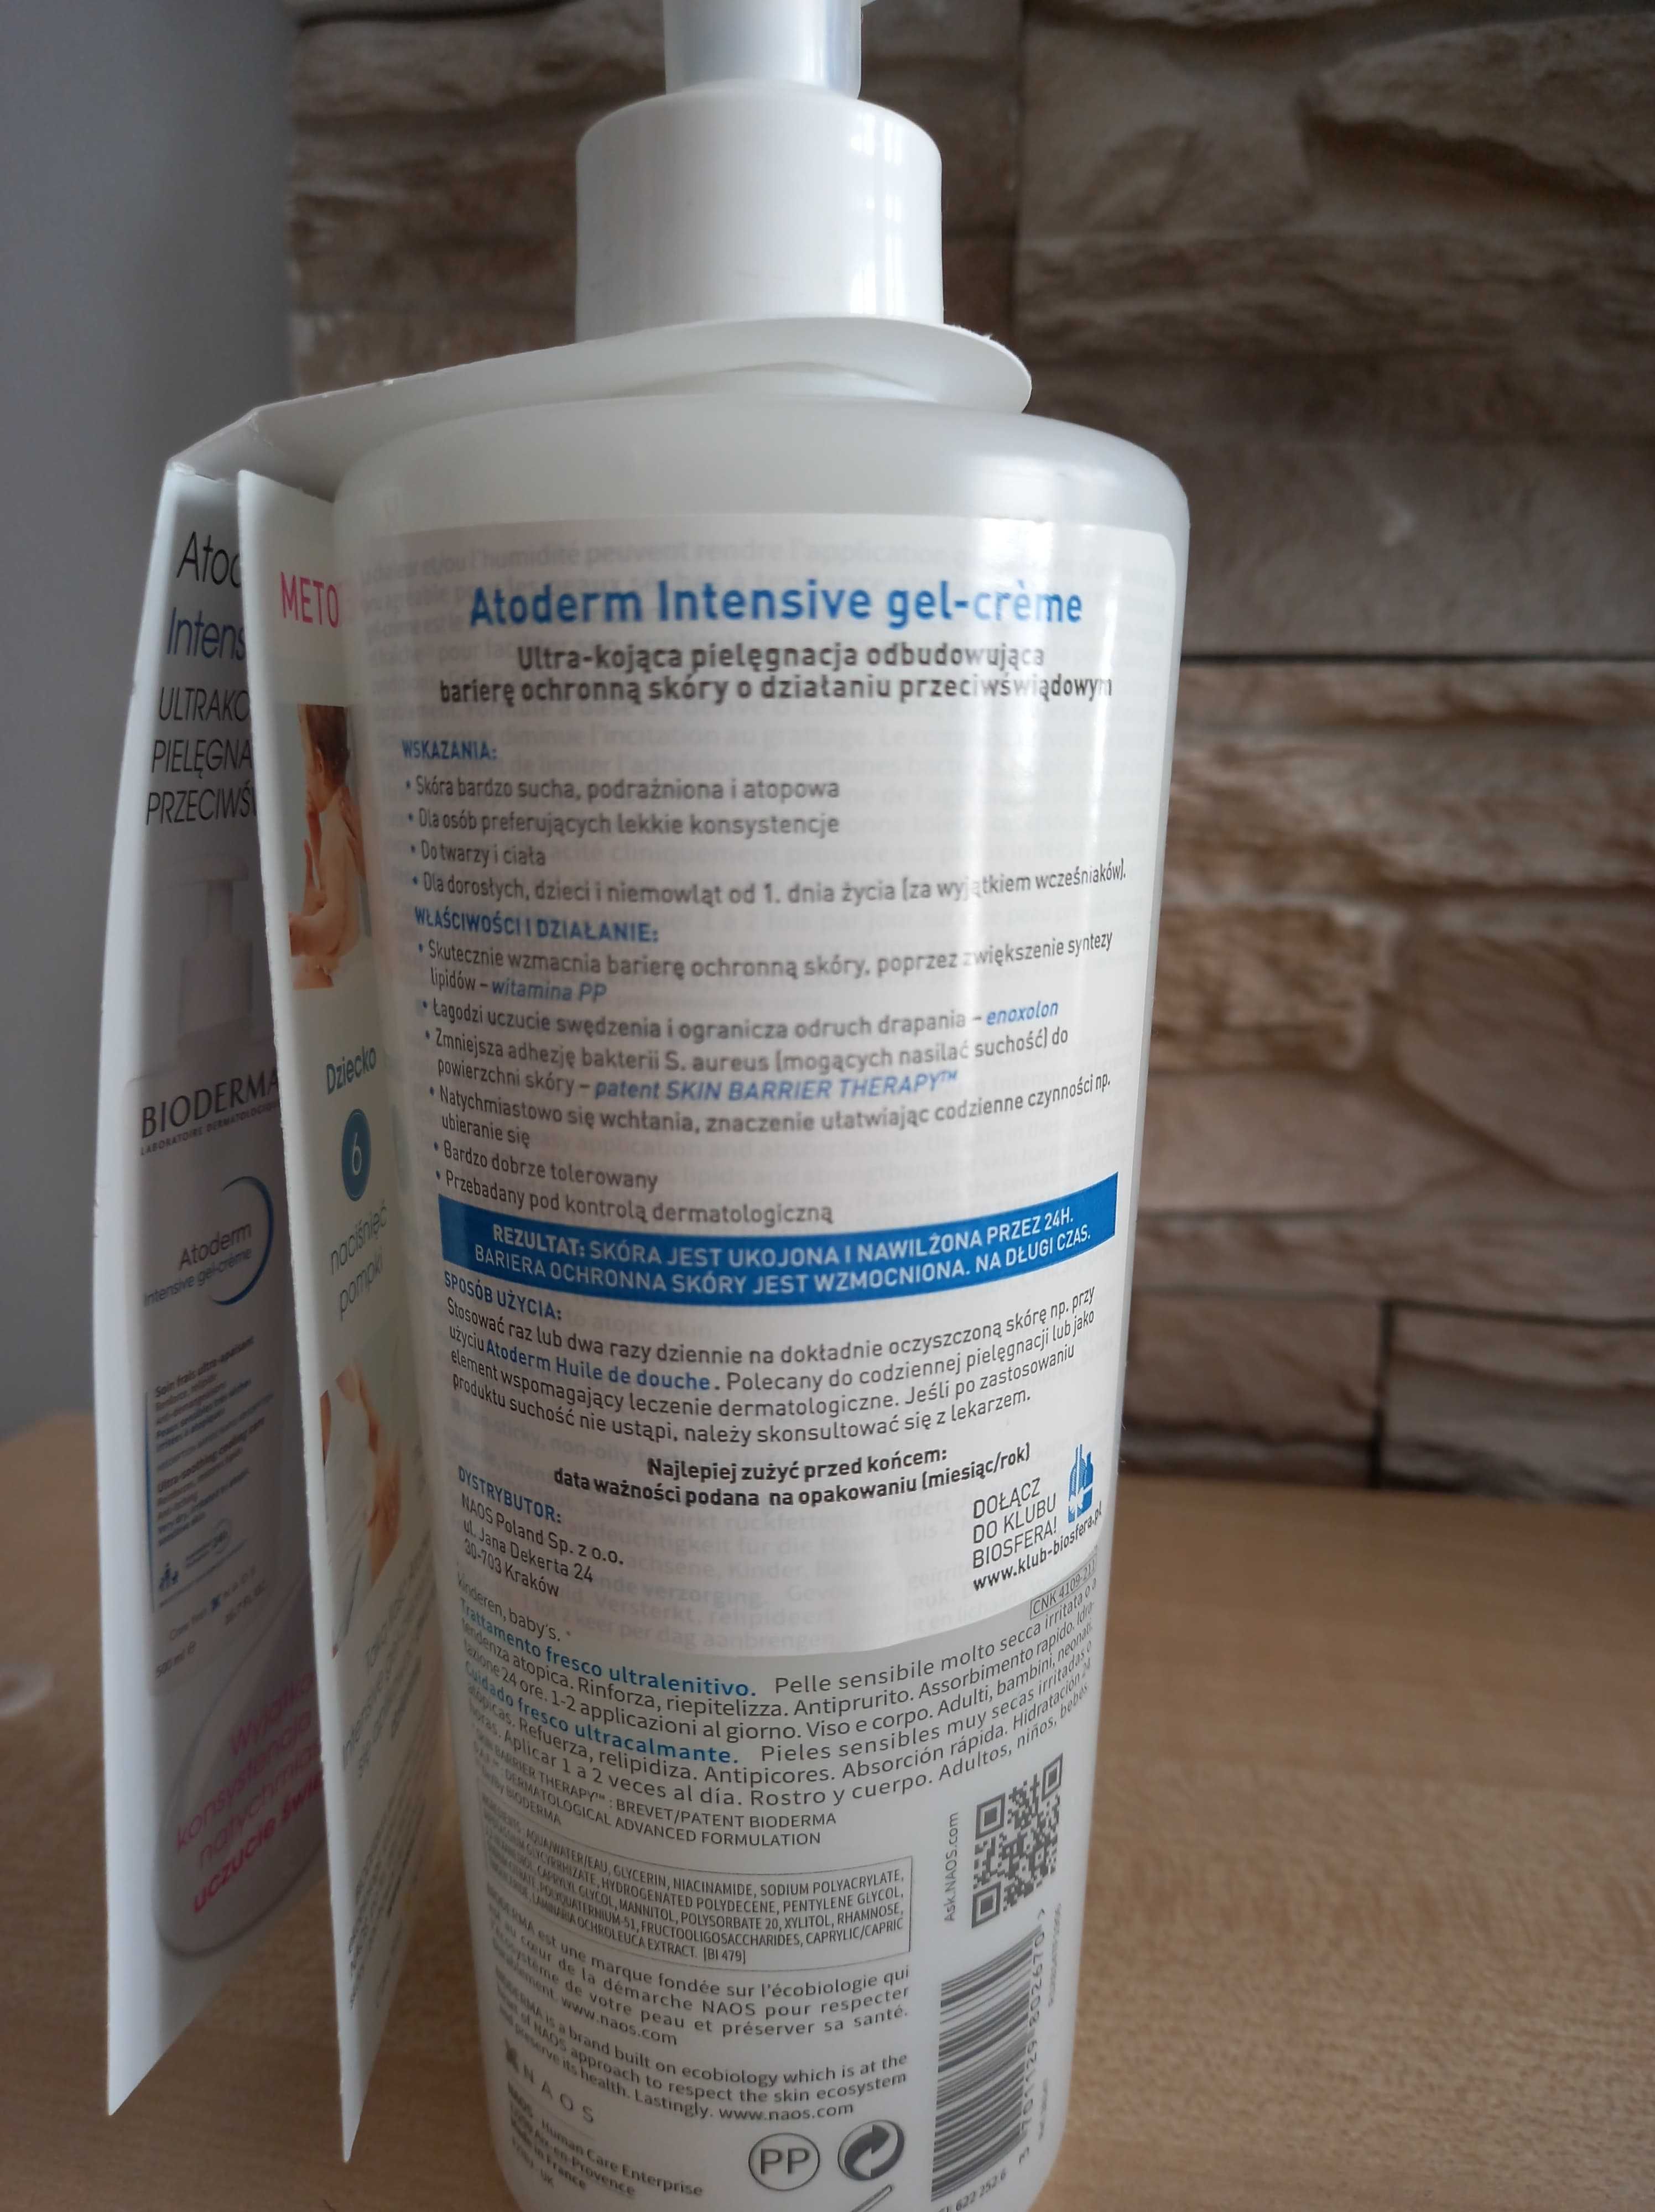 Biodema Atoderm Intensive gel-creme 500ml